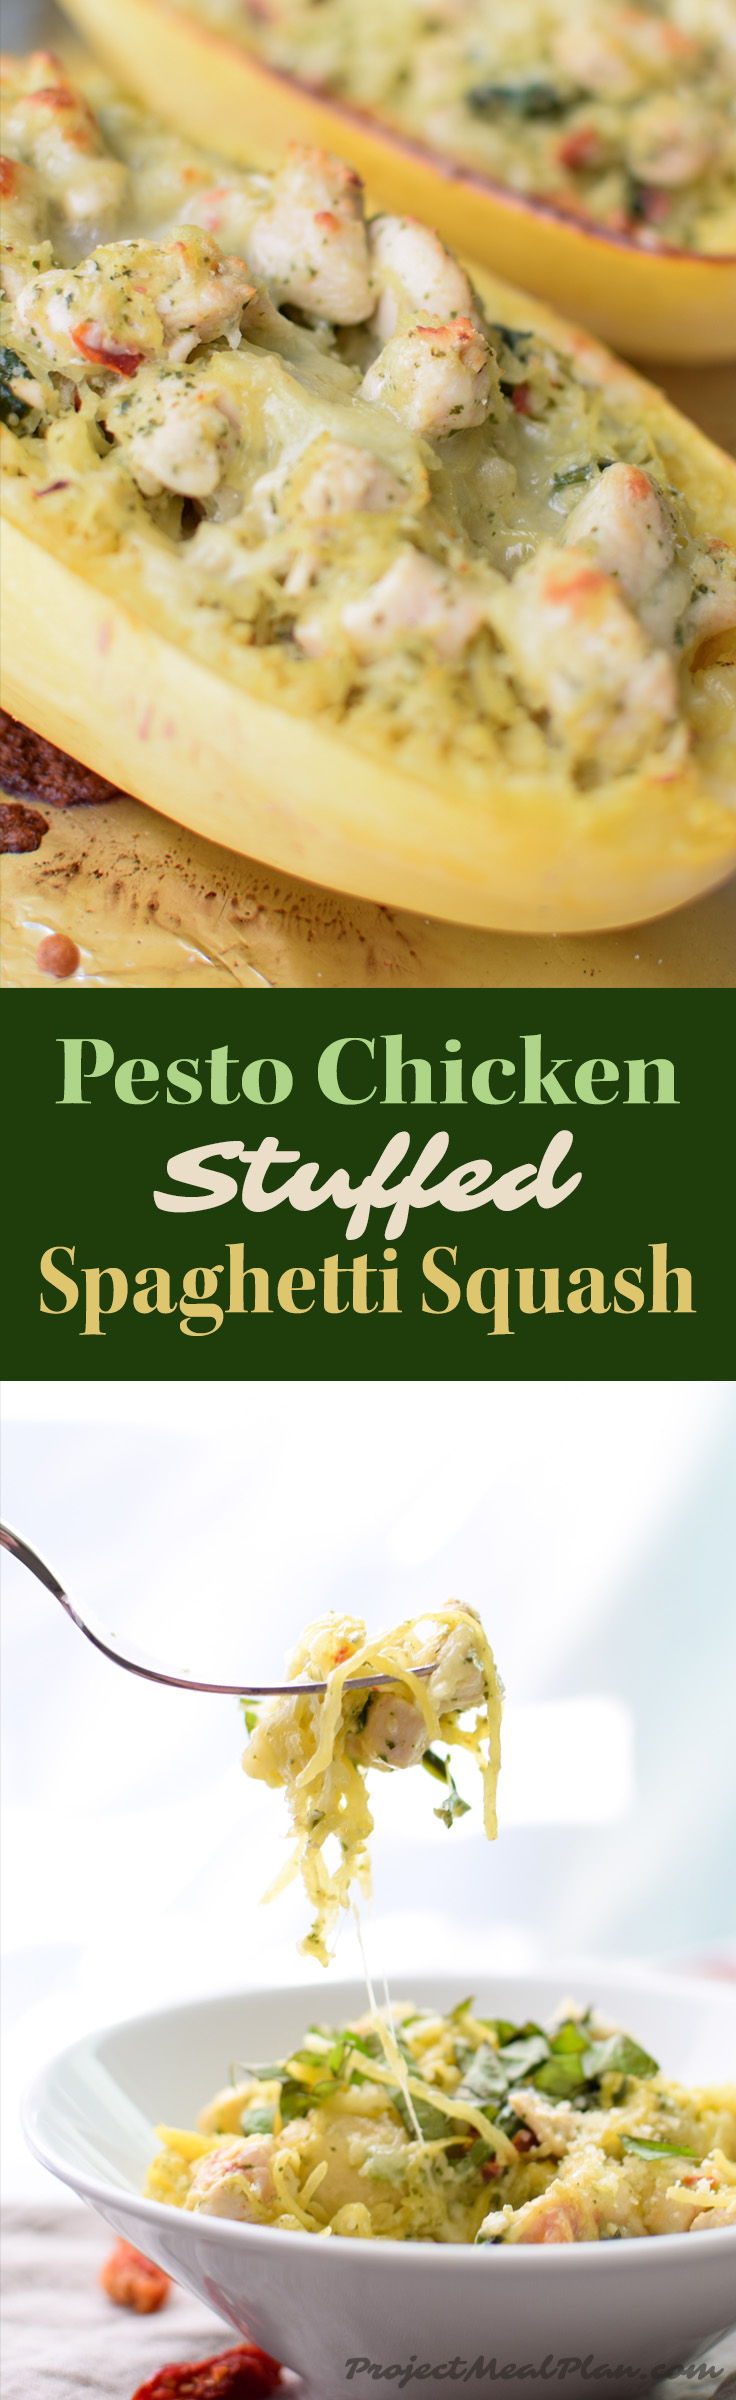 How do you make microwave spaghetti squash pesto?